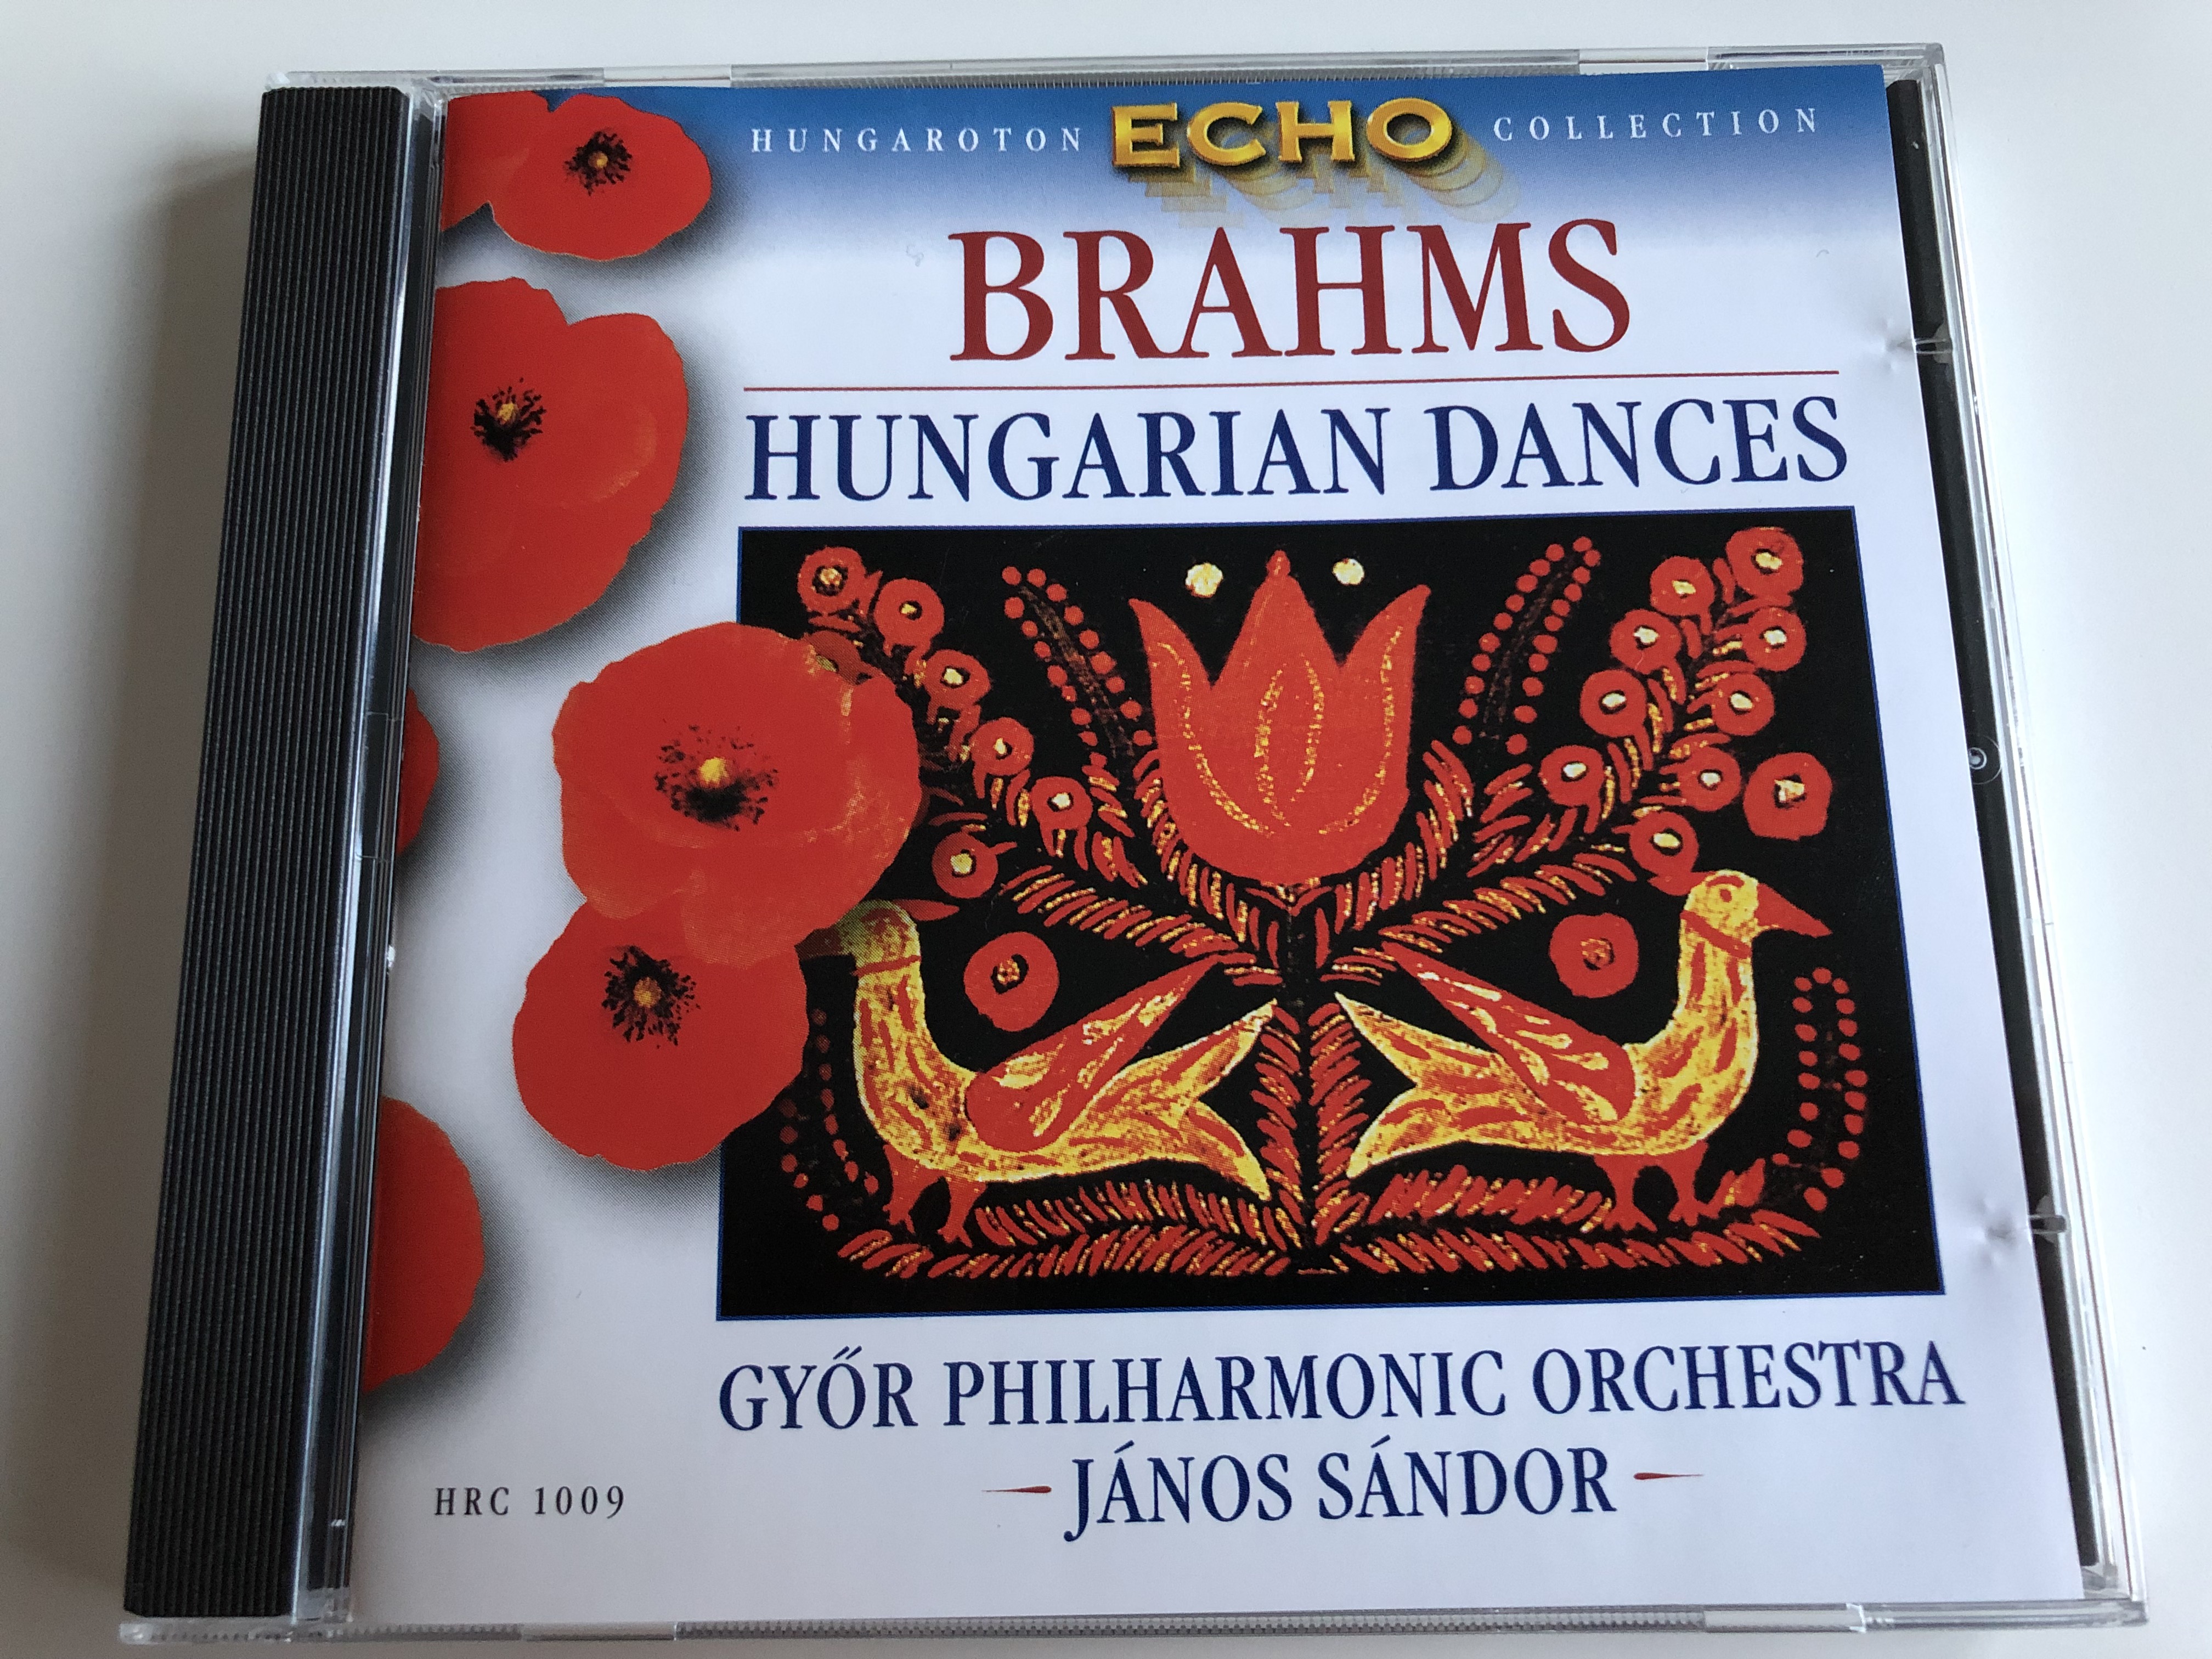 brahms-hungarian-dances-gyor-philharmonic-orchestra-janos-sandor-hungaroton-echo-collection-hungaroton-classic-audio-cd-1999-stereo-hrc-1009-1-.jpg